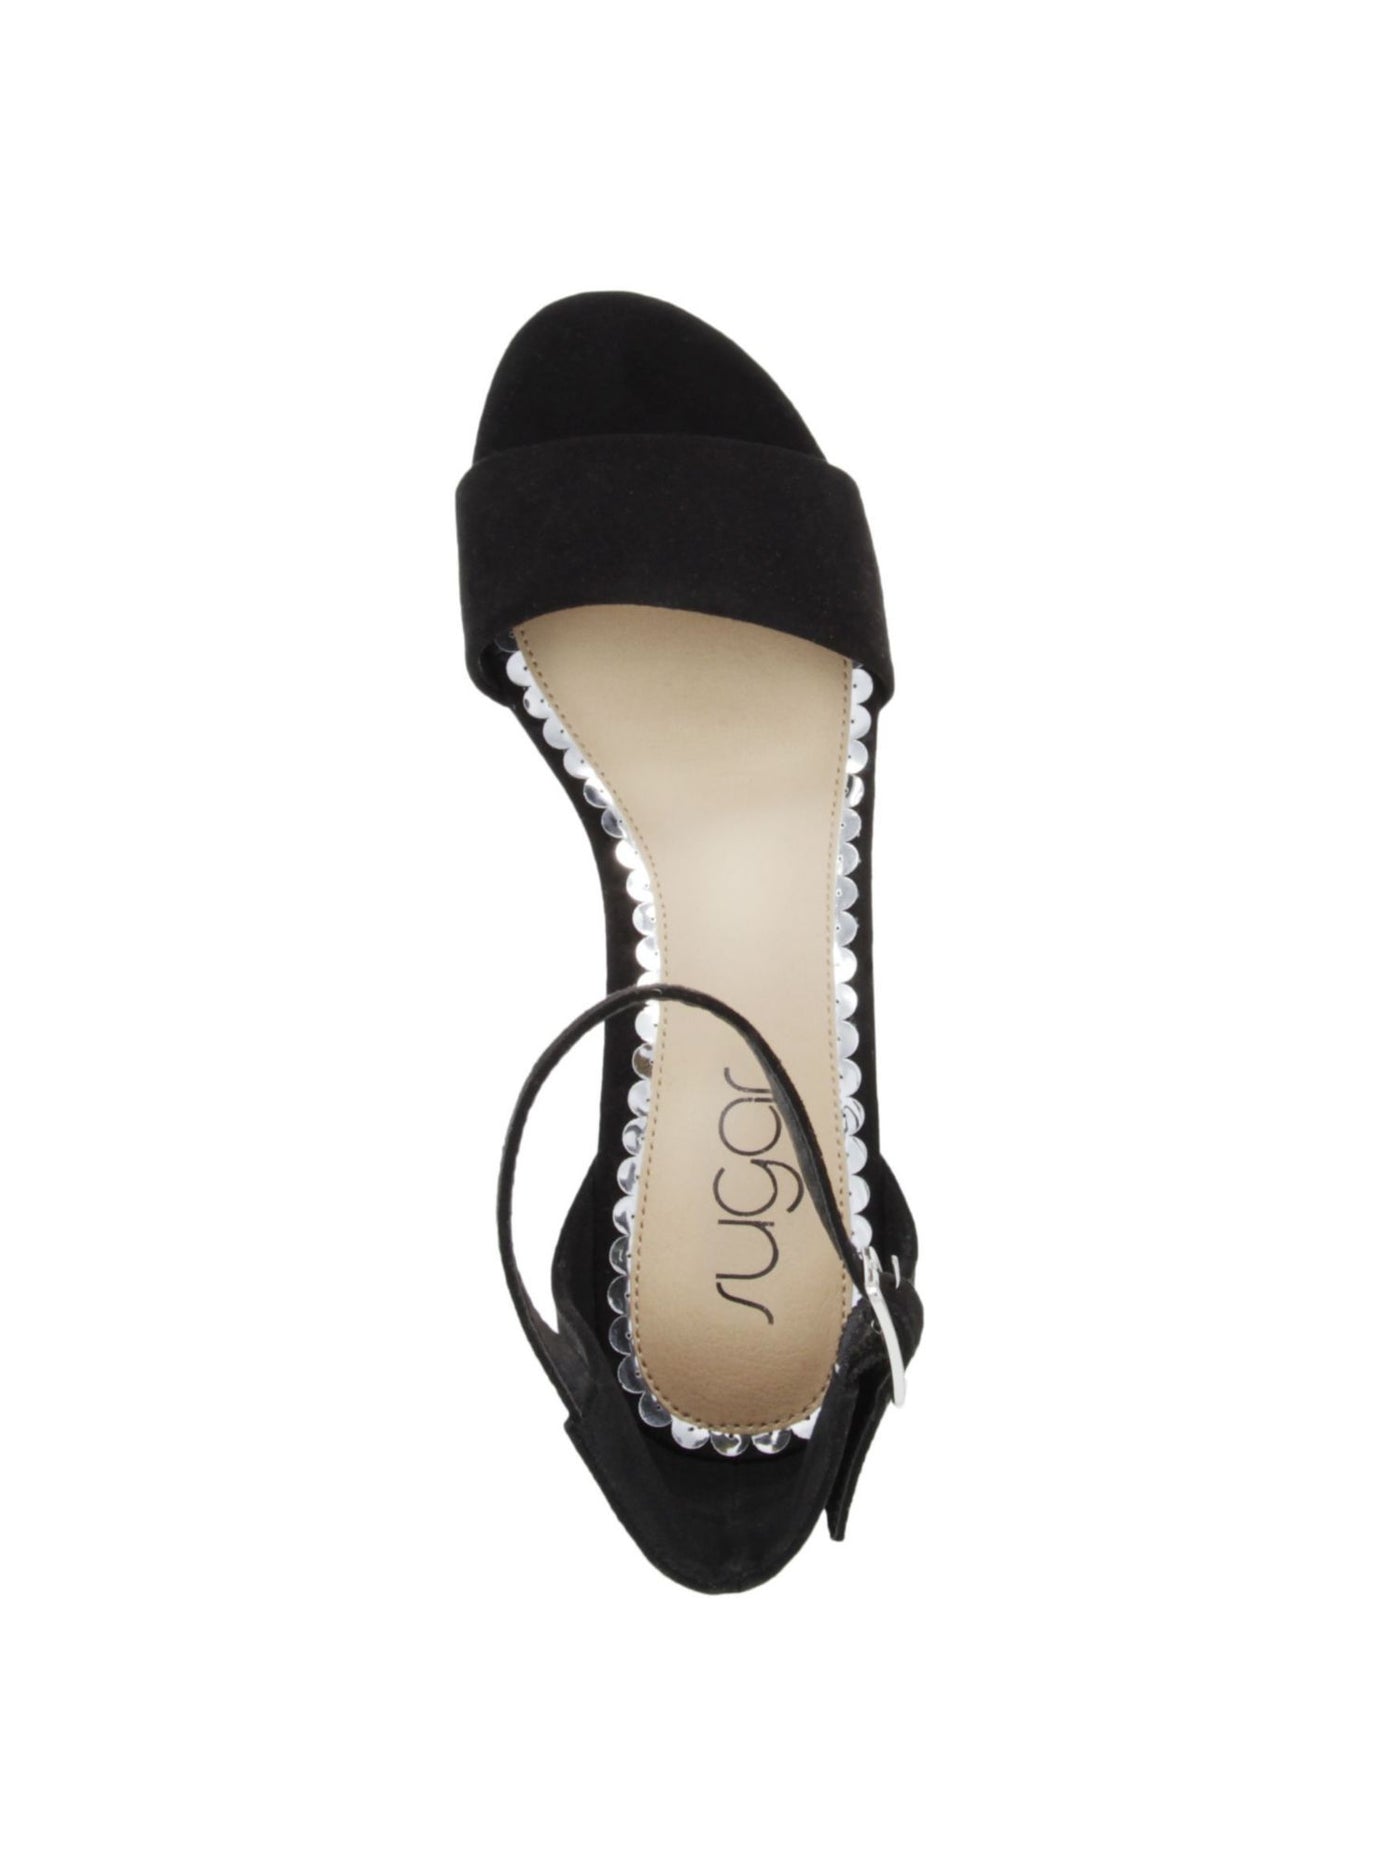 SUGAR Womens Black Adjustable Strap Noelle Low Open Toe Block Heel Buckle Dress Sandals 9 M